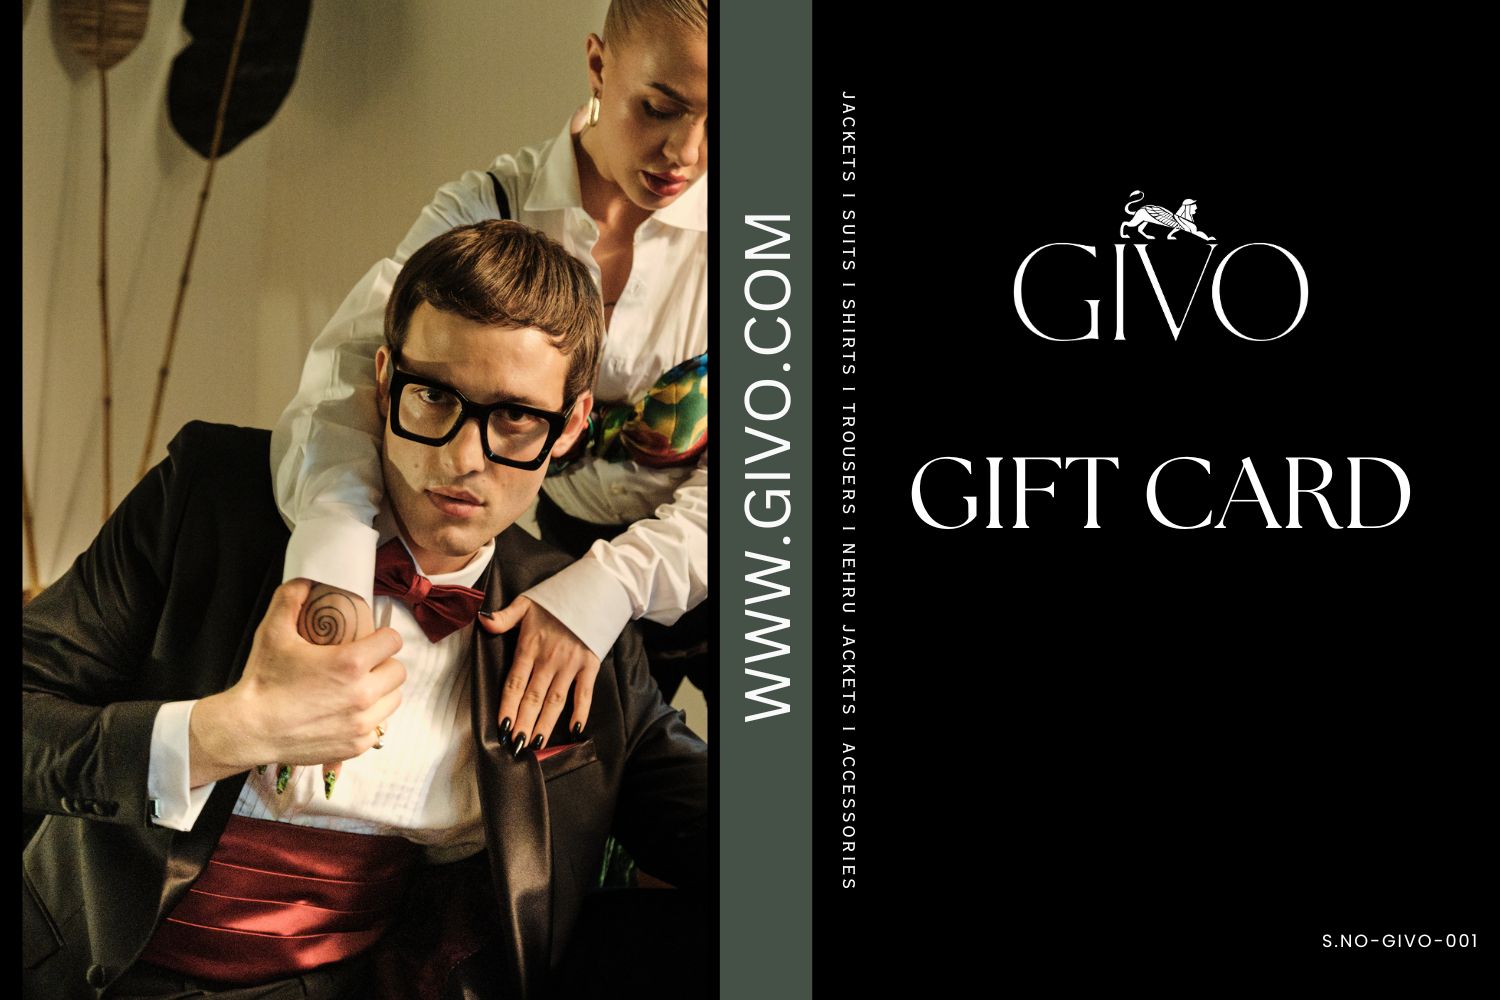 GIVO Gift Card